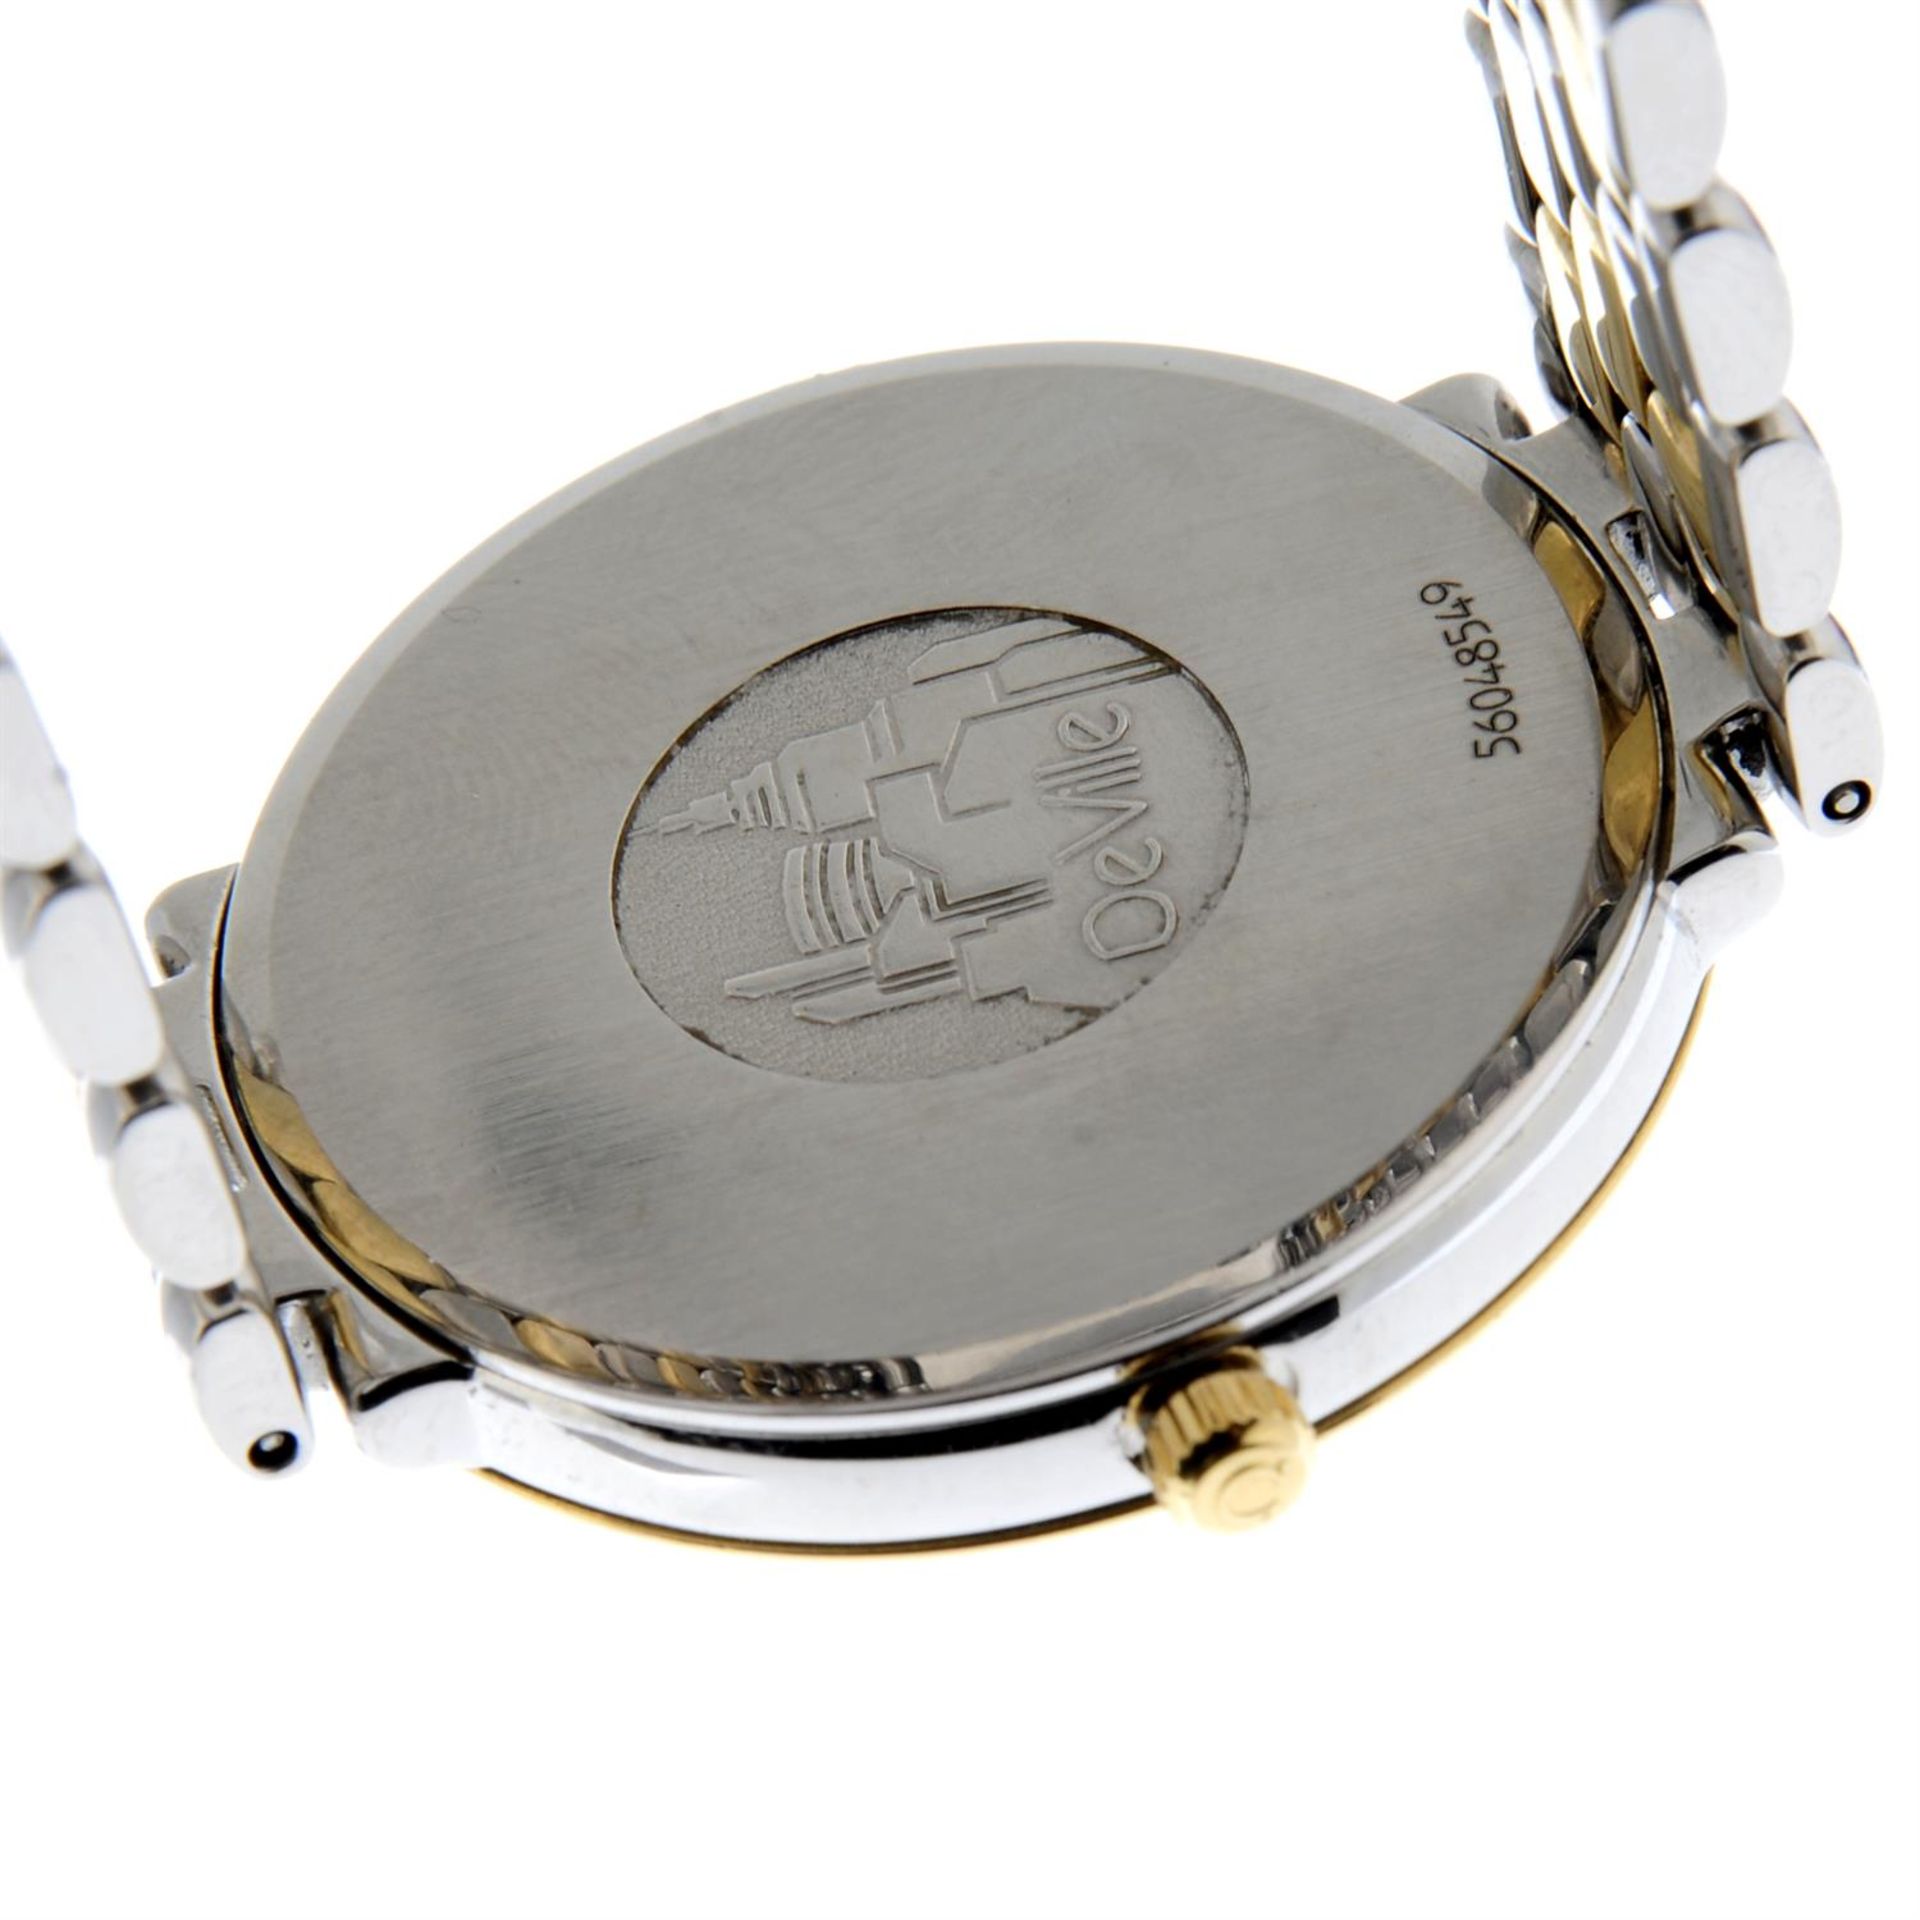 OMEGA - a bi-metal De Ville bracelet watch, 33mm. - Image 2 of 5